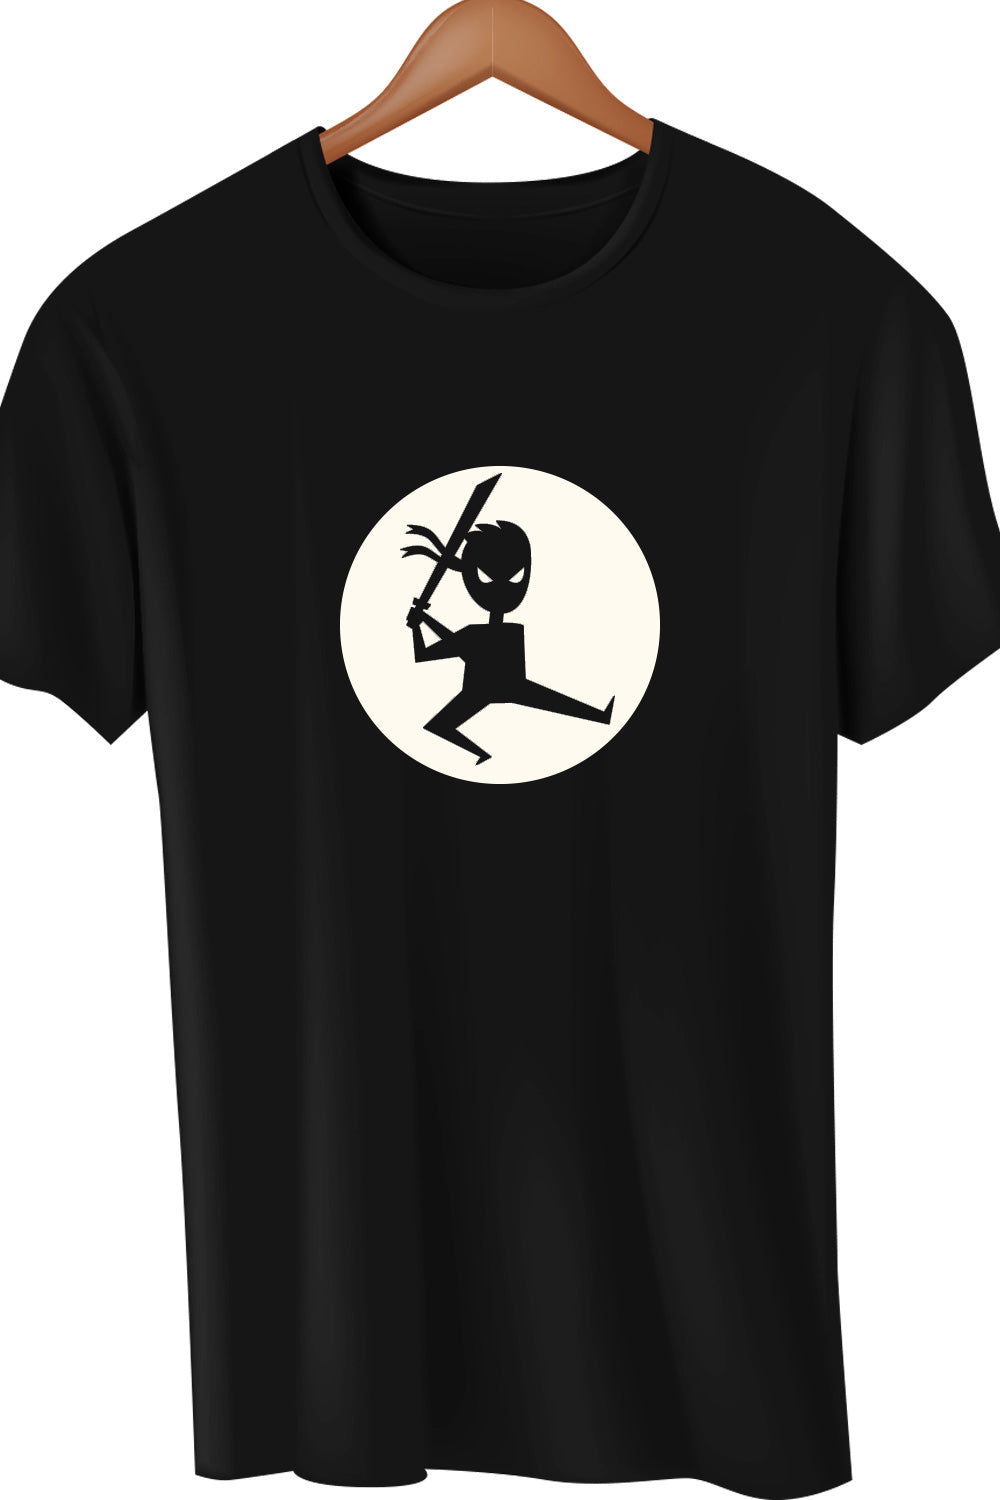 Ninja Warrior - Silhouette Black Printed Casual T-Shirt